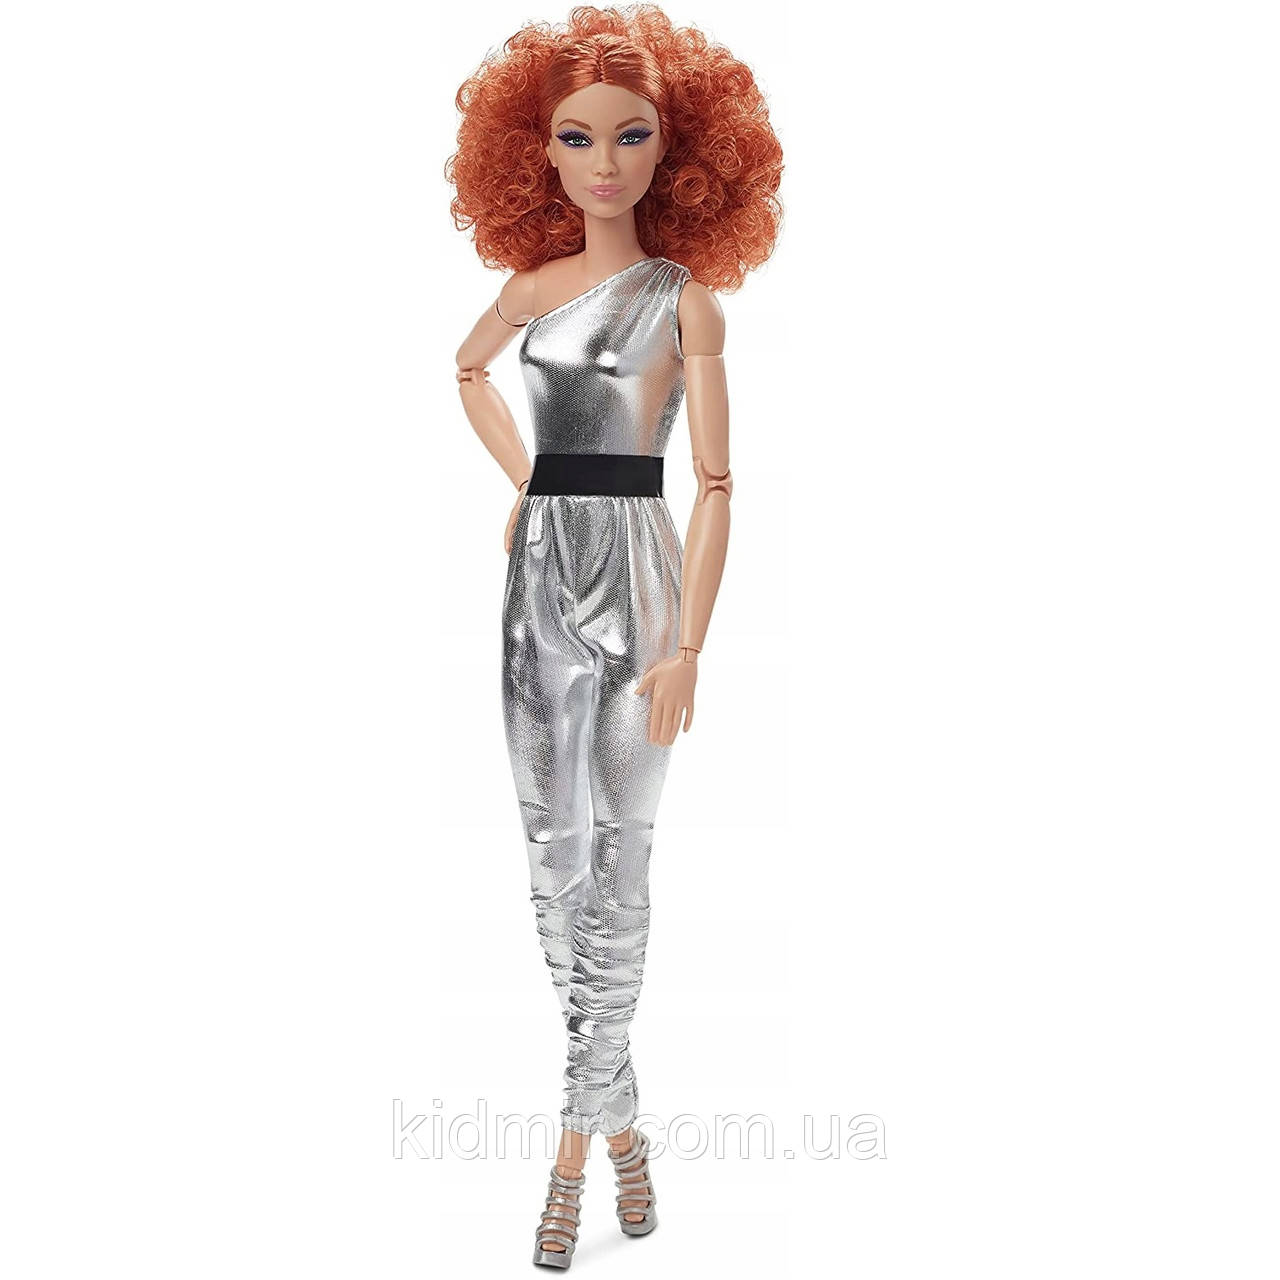 Лялька Барбі Руде волосся Barbie Signature Looks HBX94